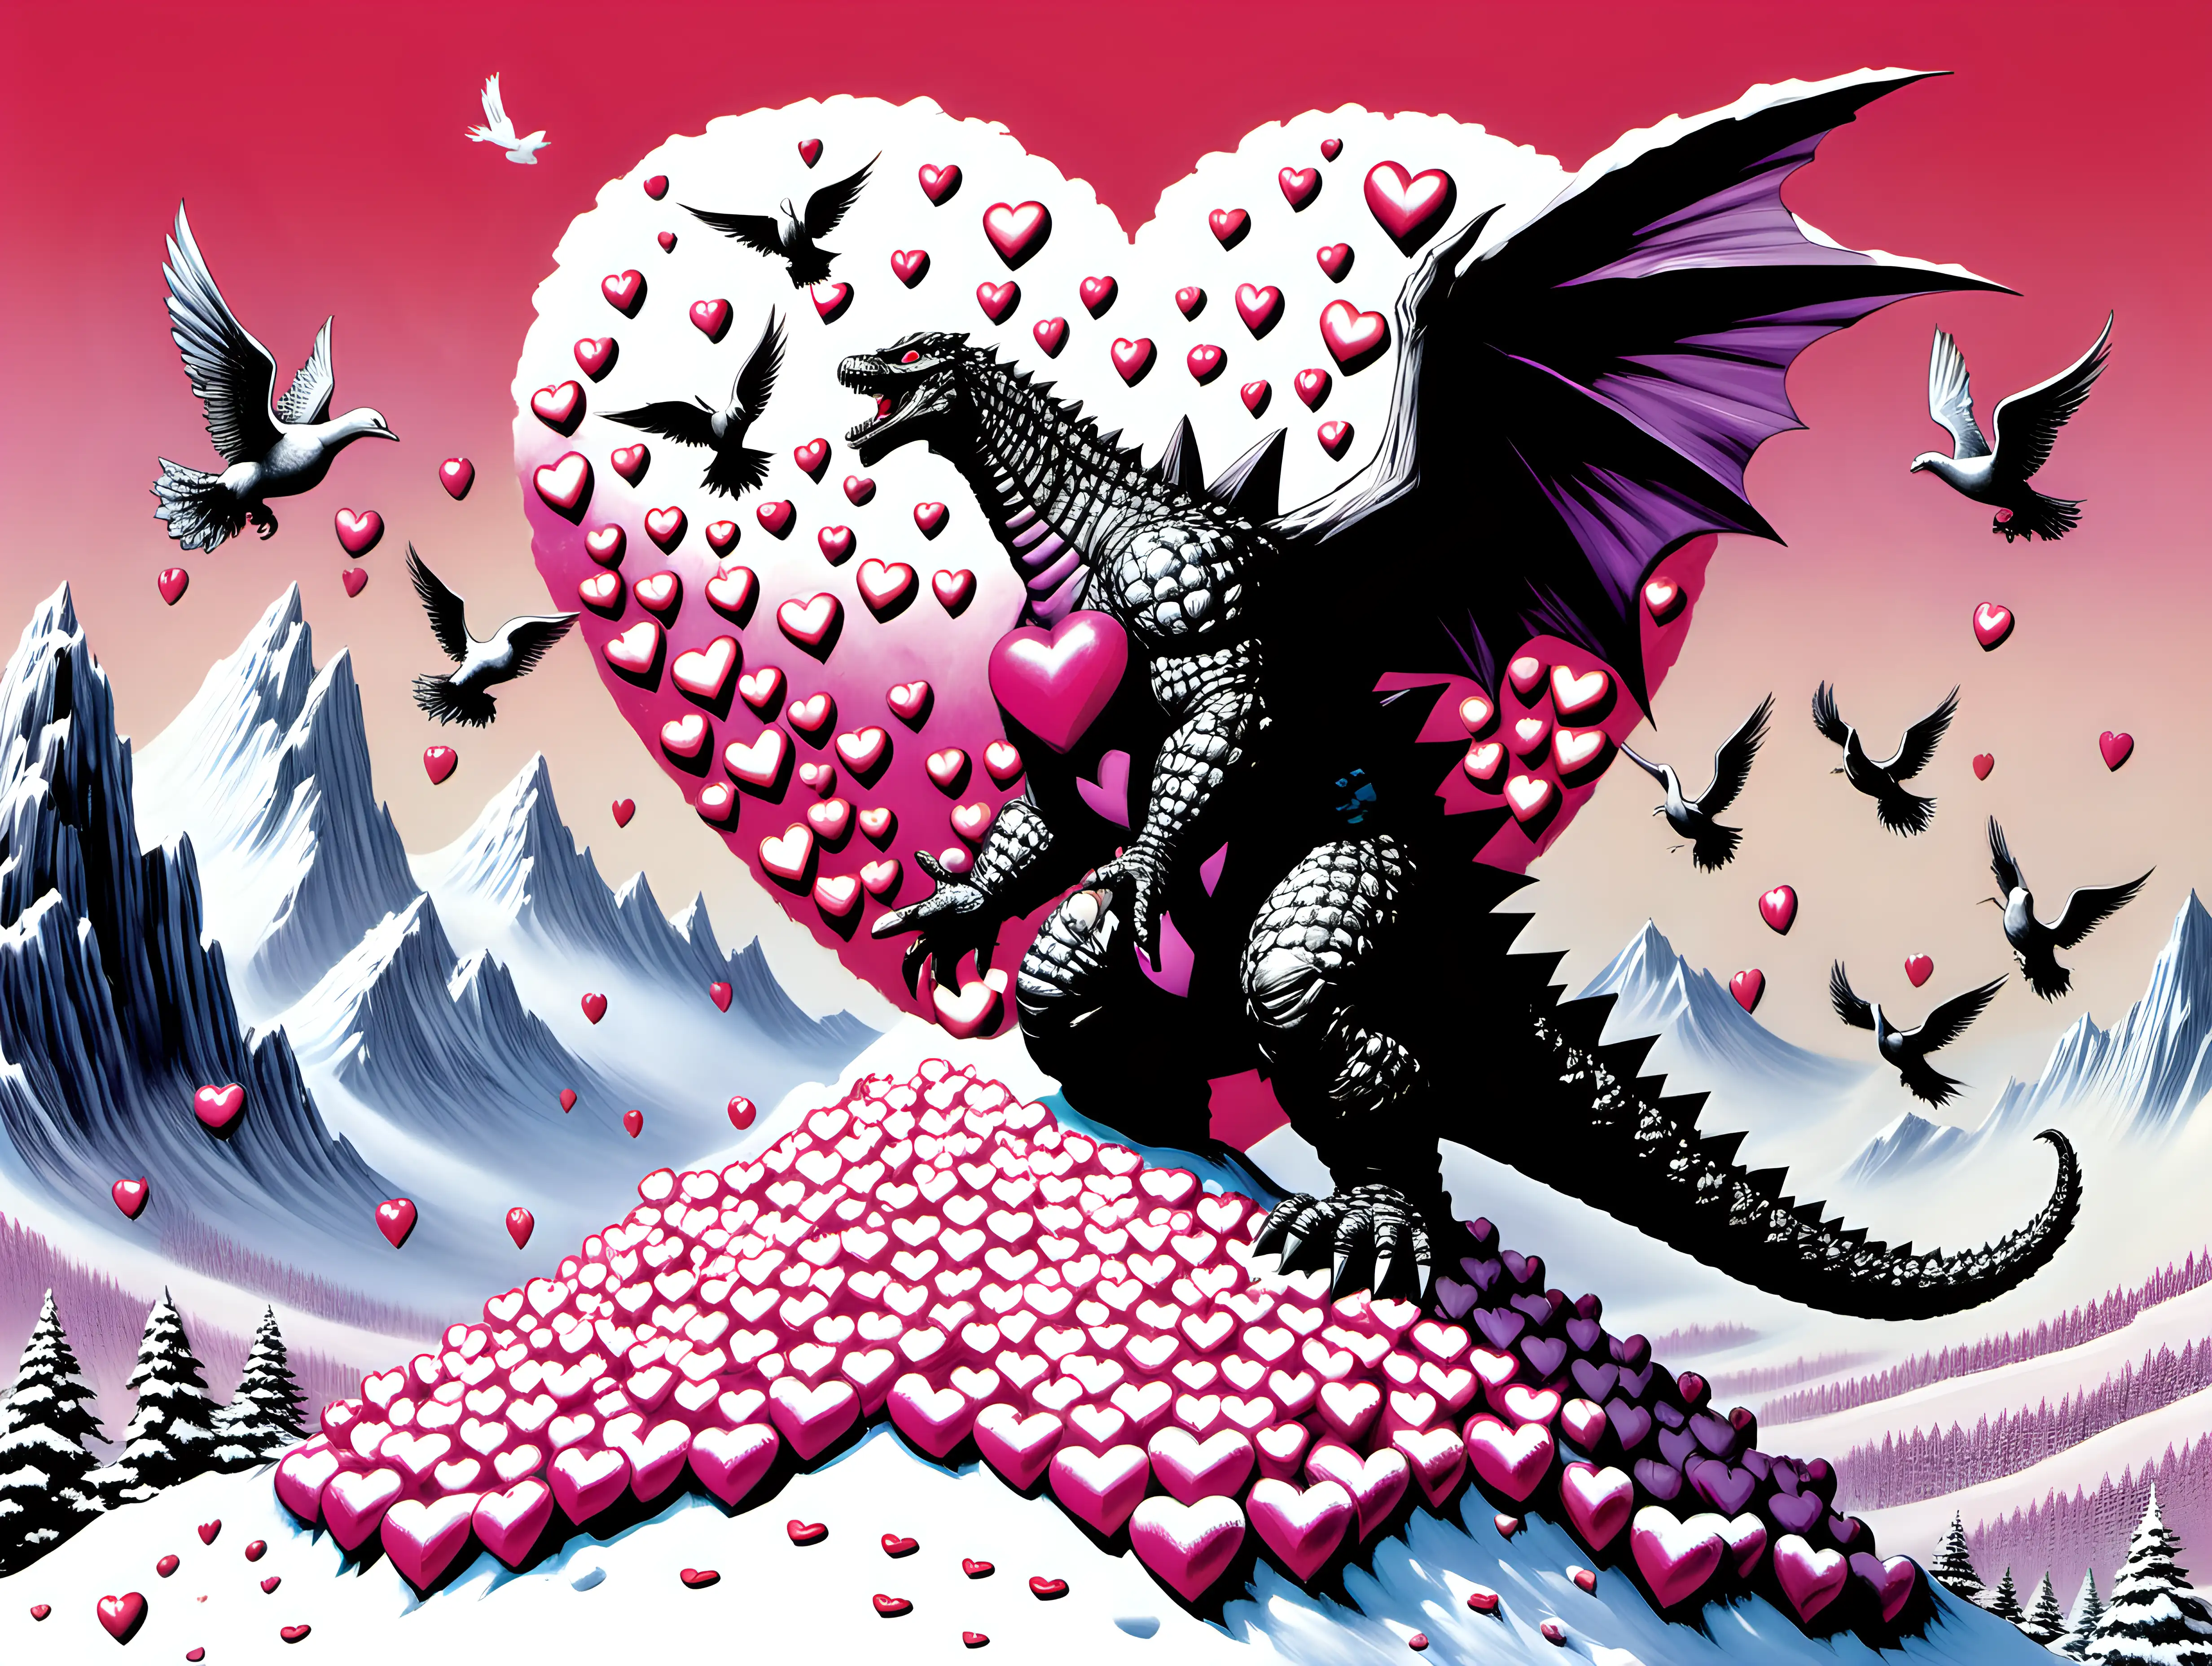 Godzilla Embracing Love Majestic Valentines Scene on SnowCapped Peak